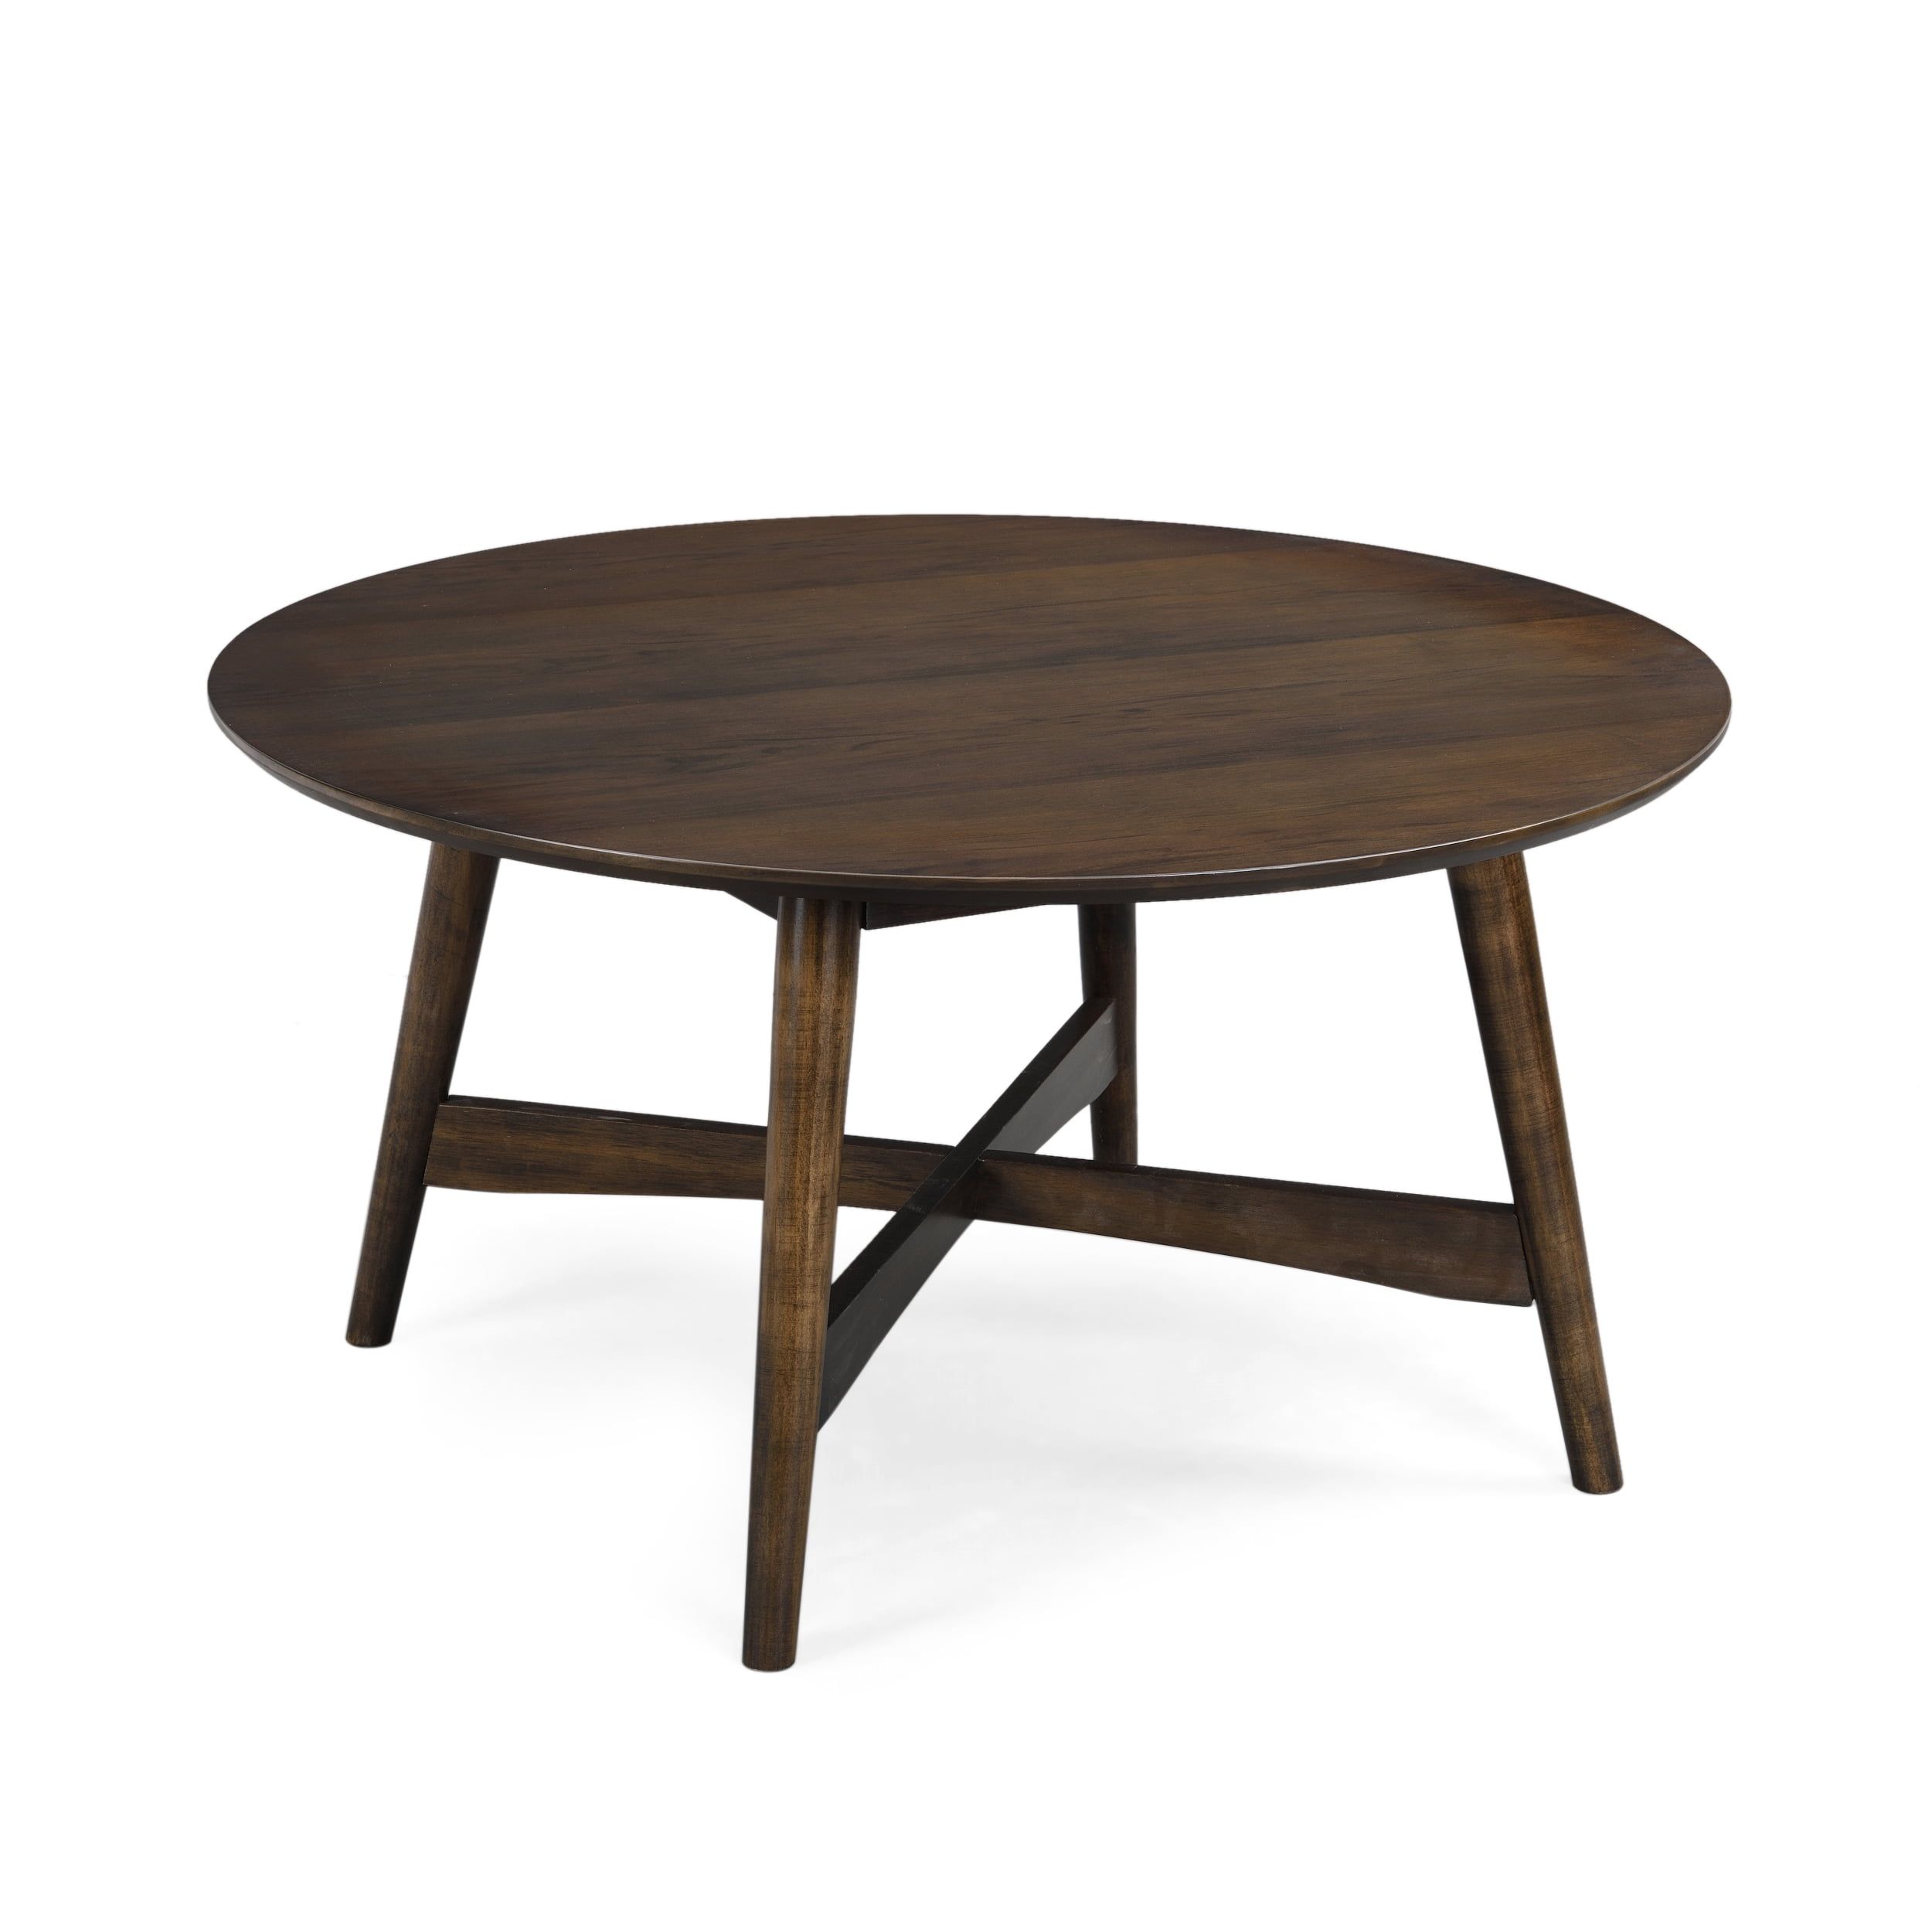 Murdock Mid Century Modern Wood Coffee Table, Gray – Walmart In Wooden Mid Century Coffee Tables (View 18 of 20)